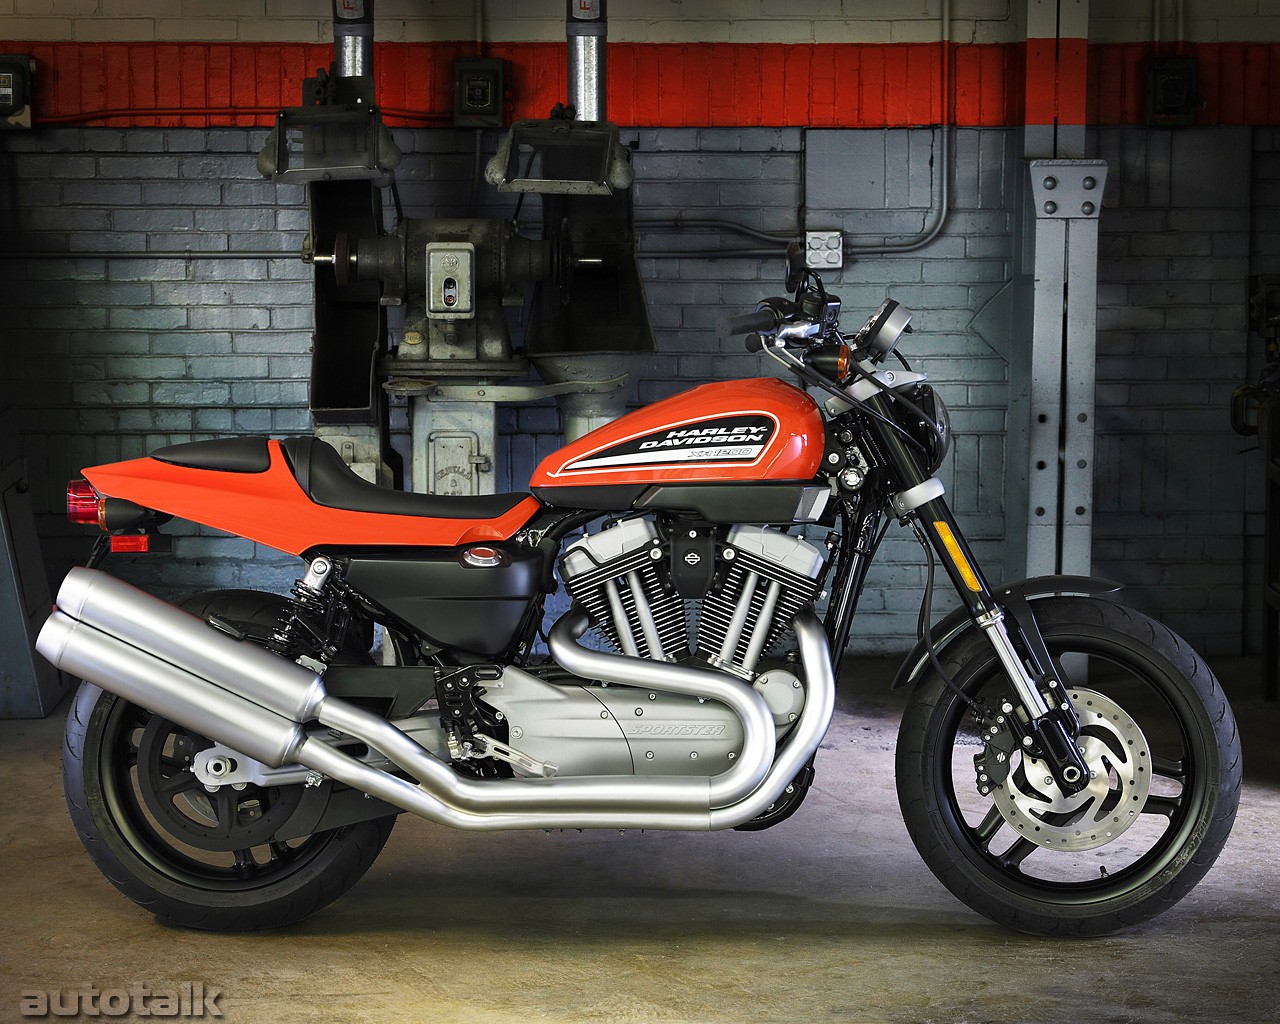 2009 Harley Davidson XR 1200